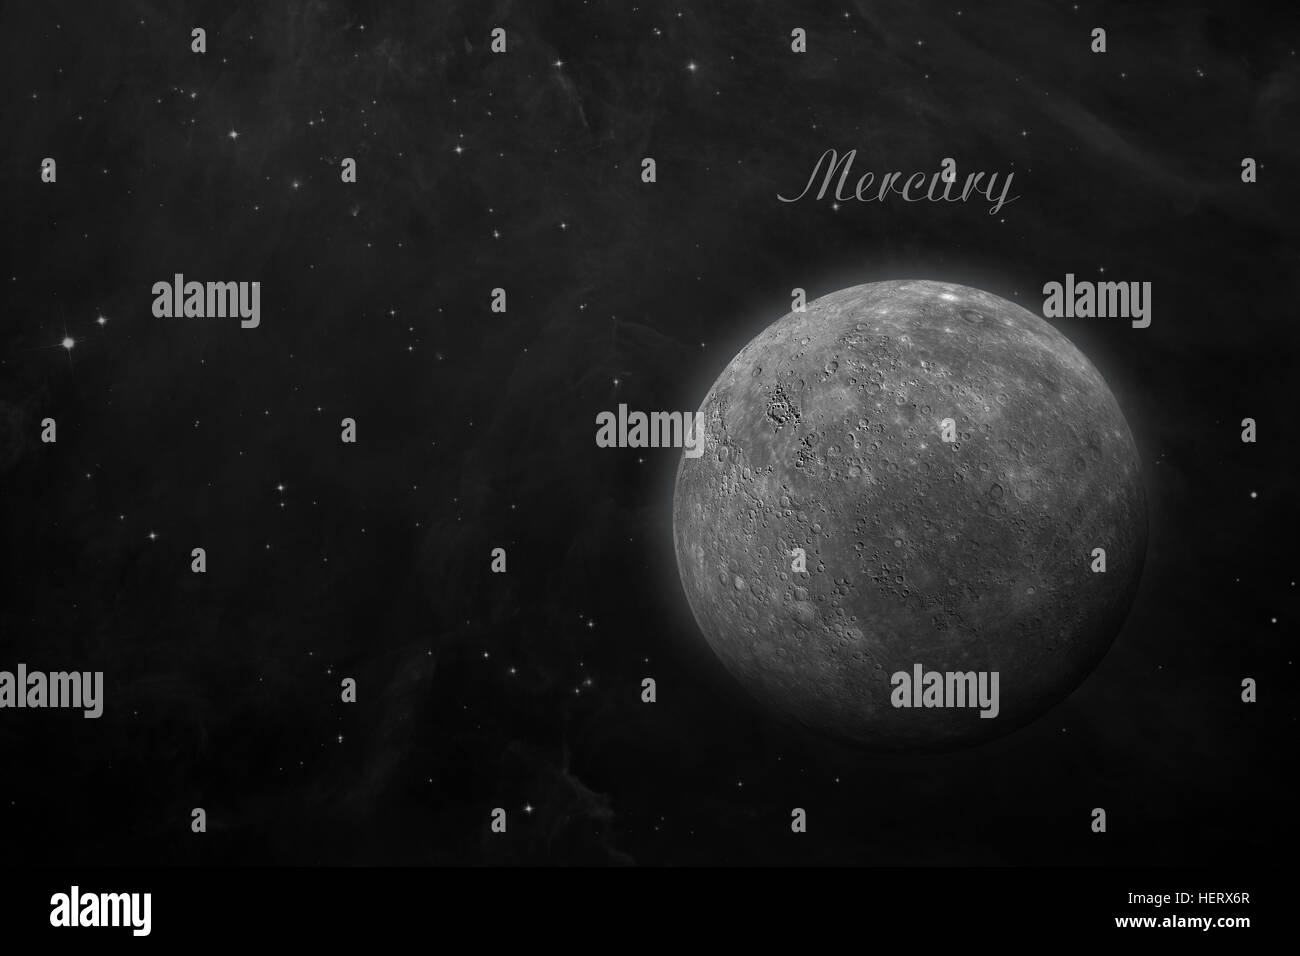 Planet Mercury. Space background. Stock Photo